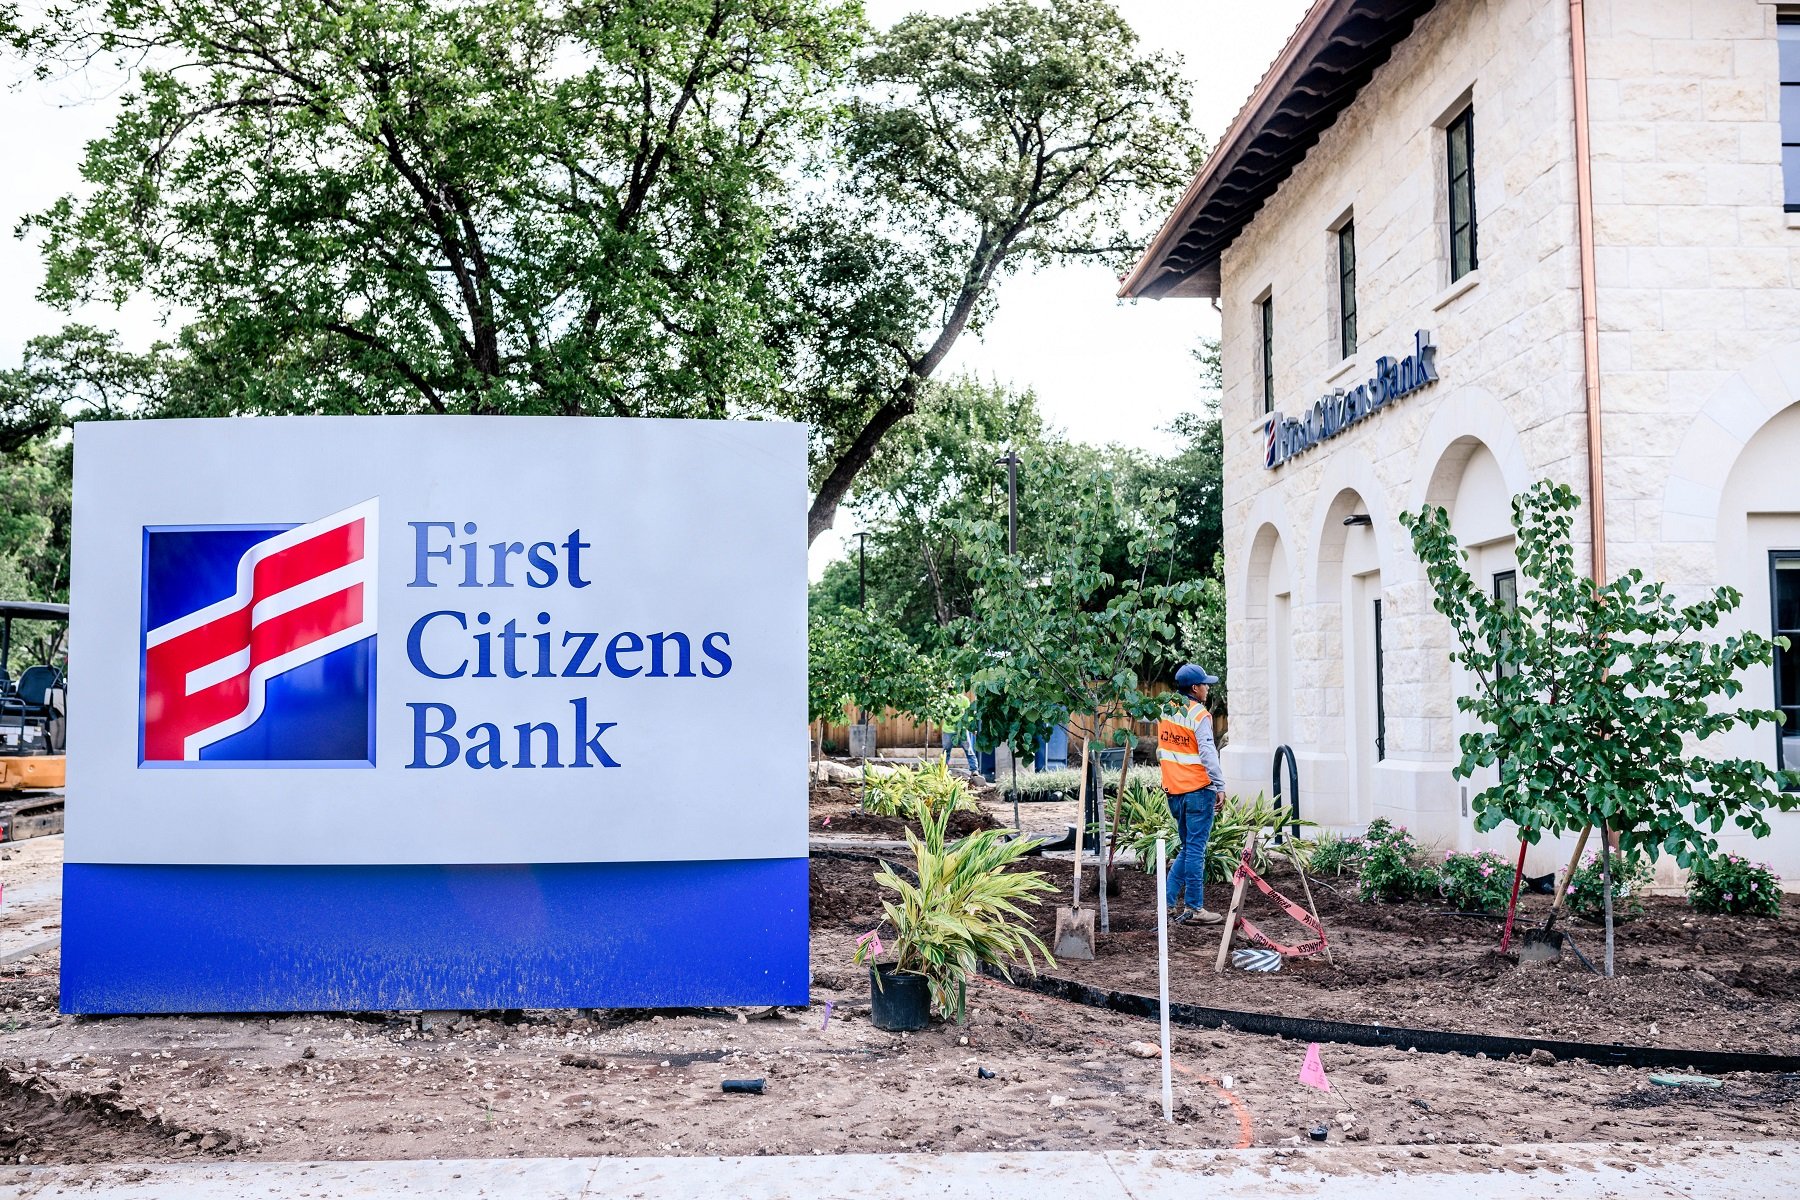 First Citizens Bank in Austin TX, landscape construction